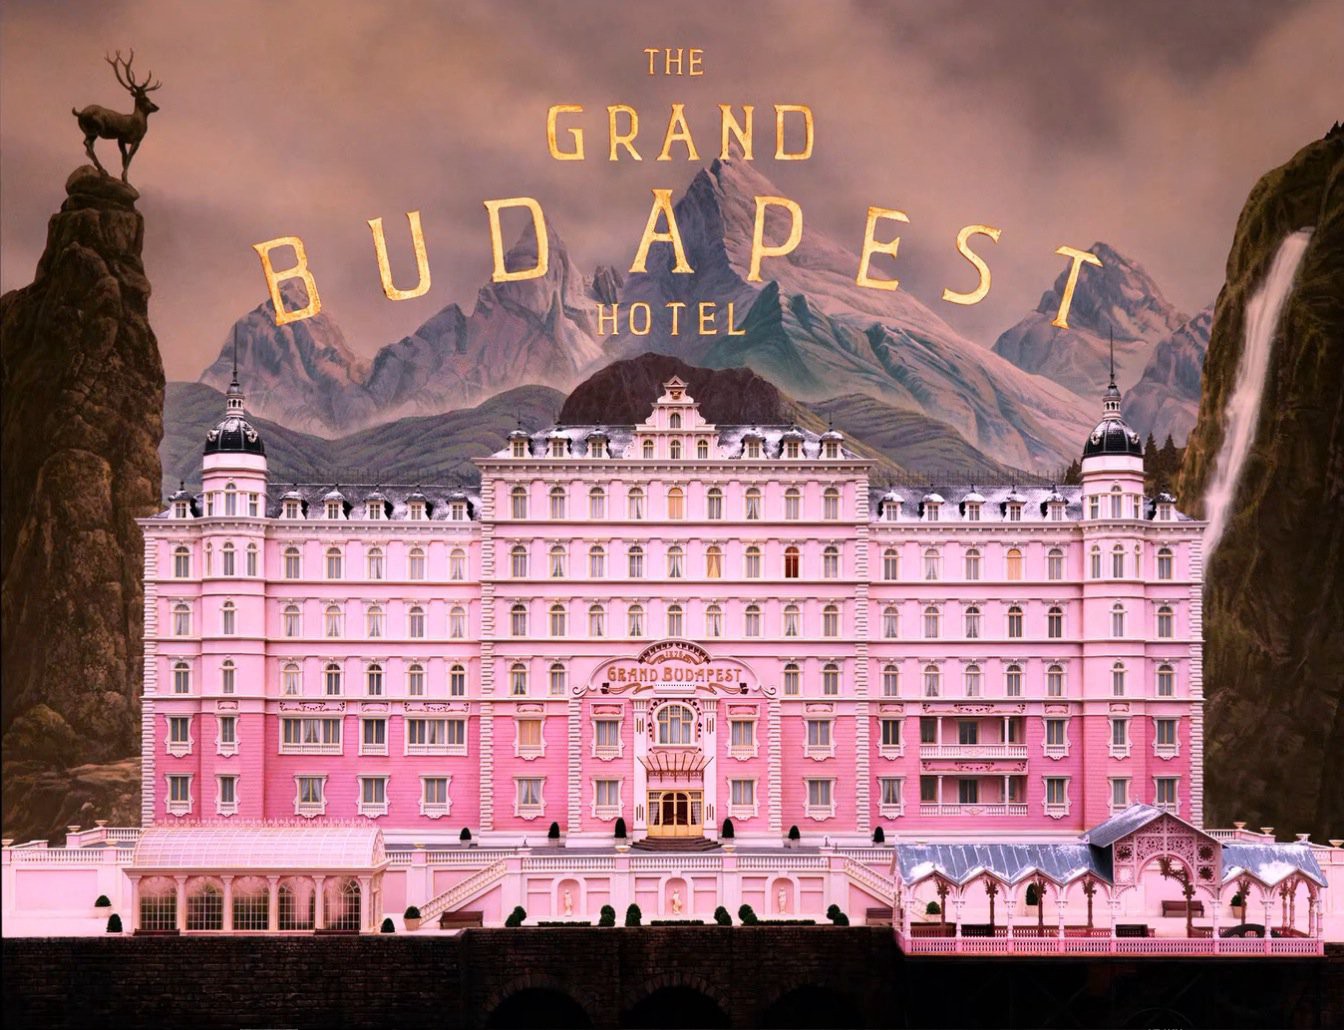 thoi-trang-phim-the-grand-budapest-hotel-poster-phim-the-grand-budapest-hotel-ELLE-Man-1.jpeg